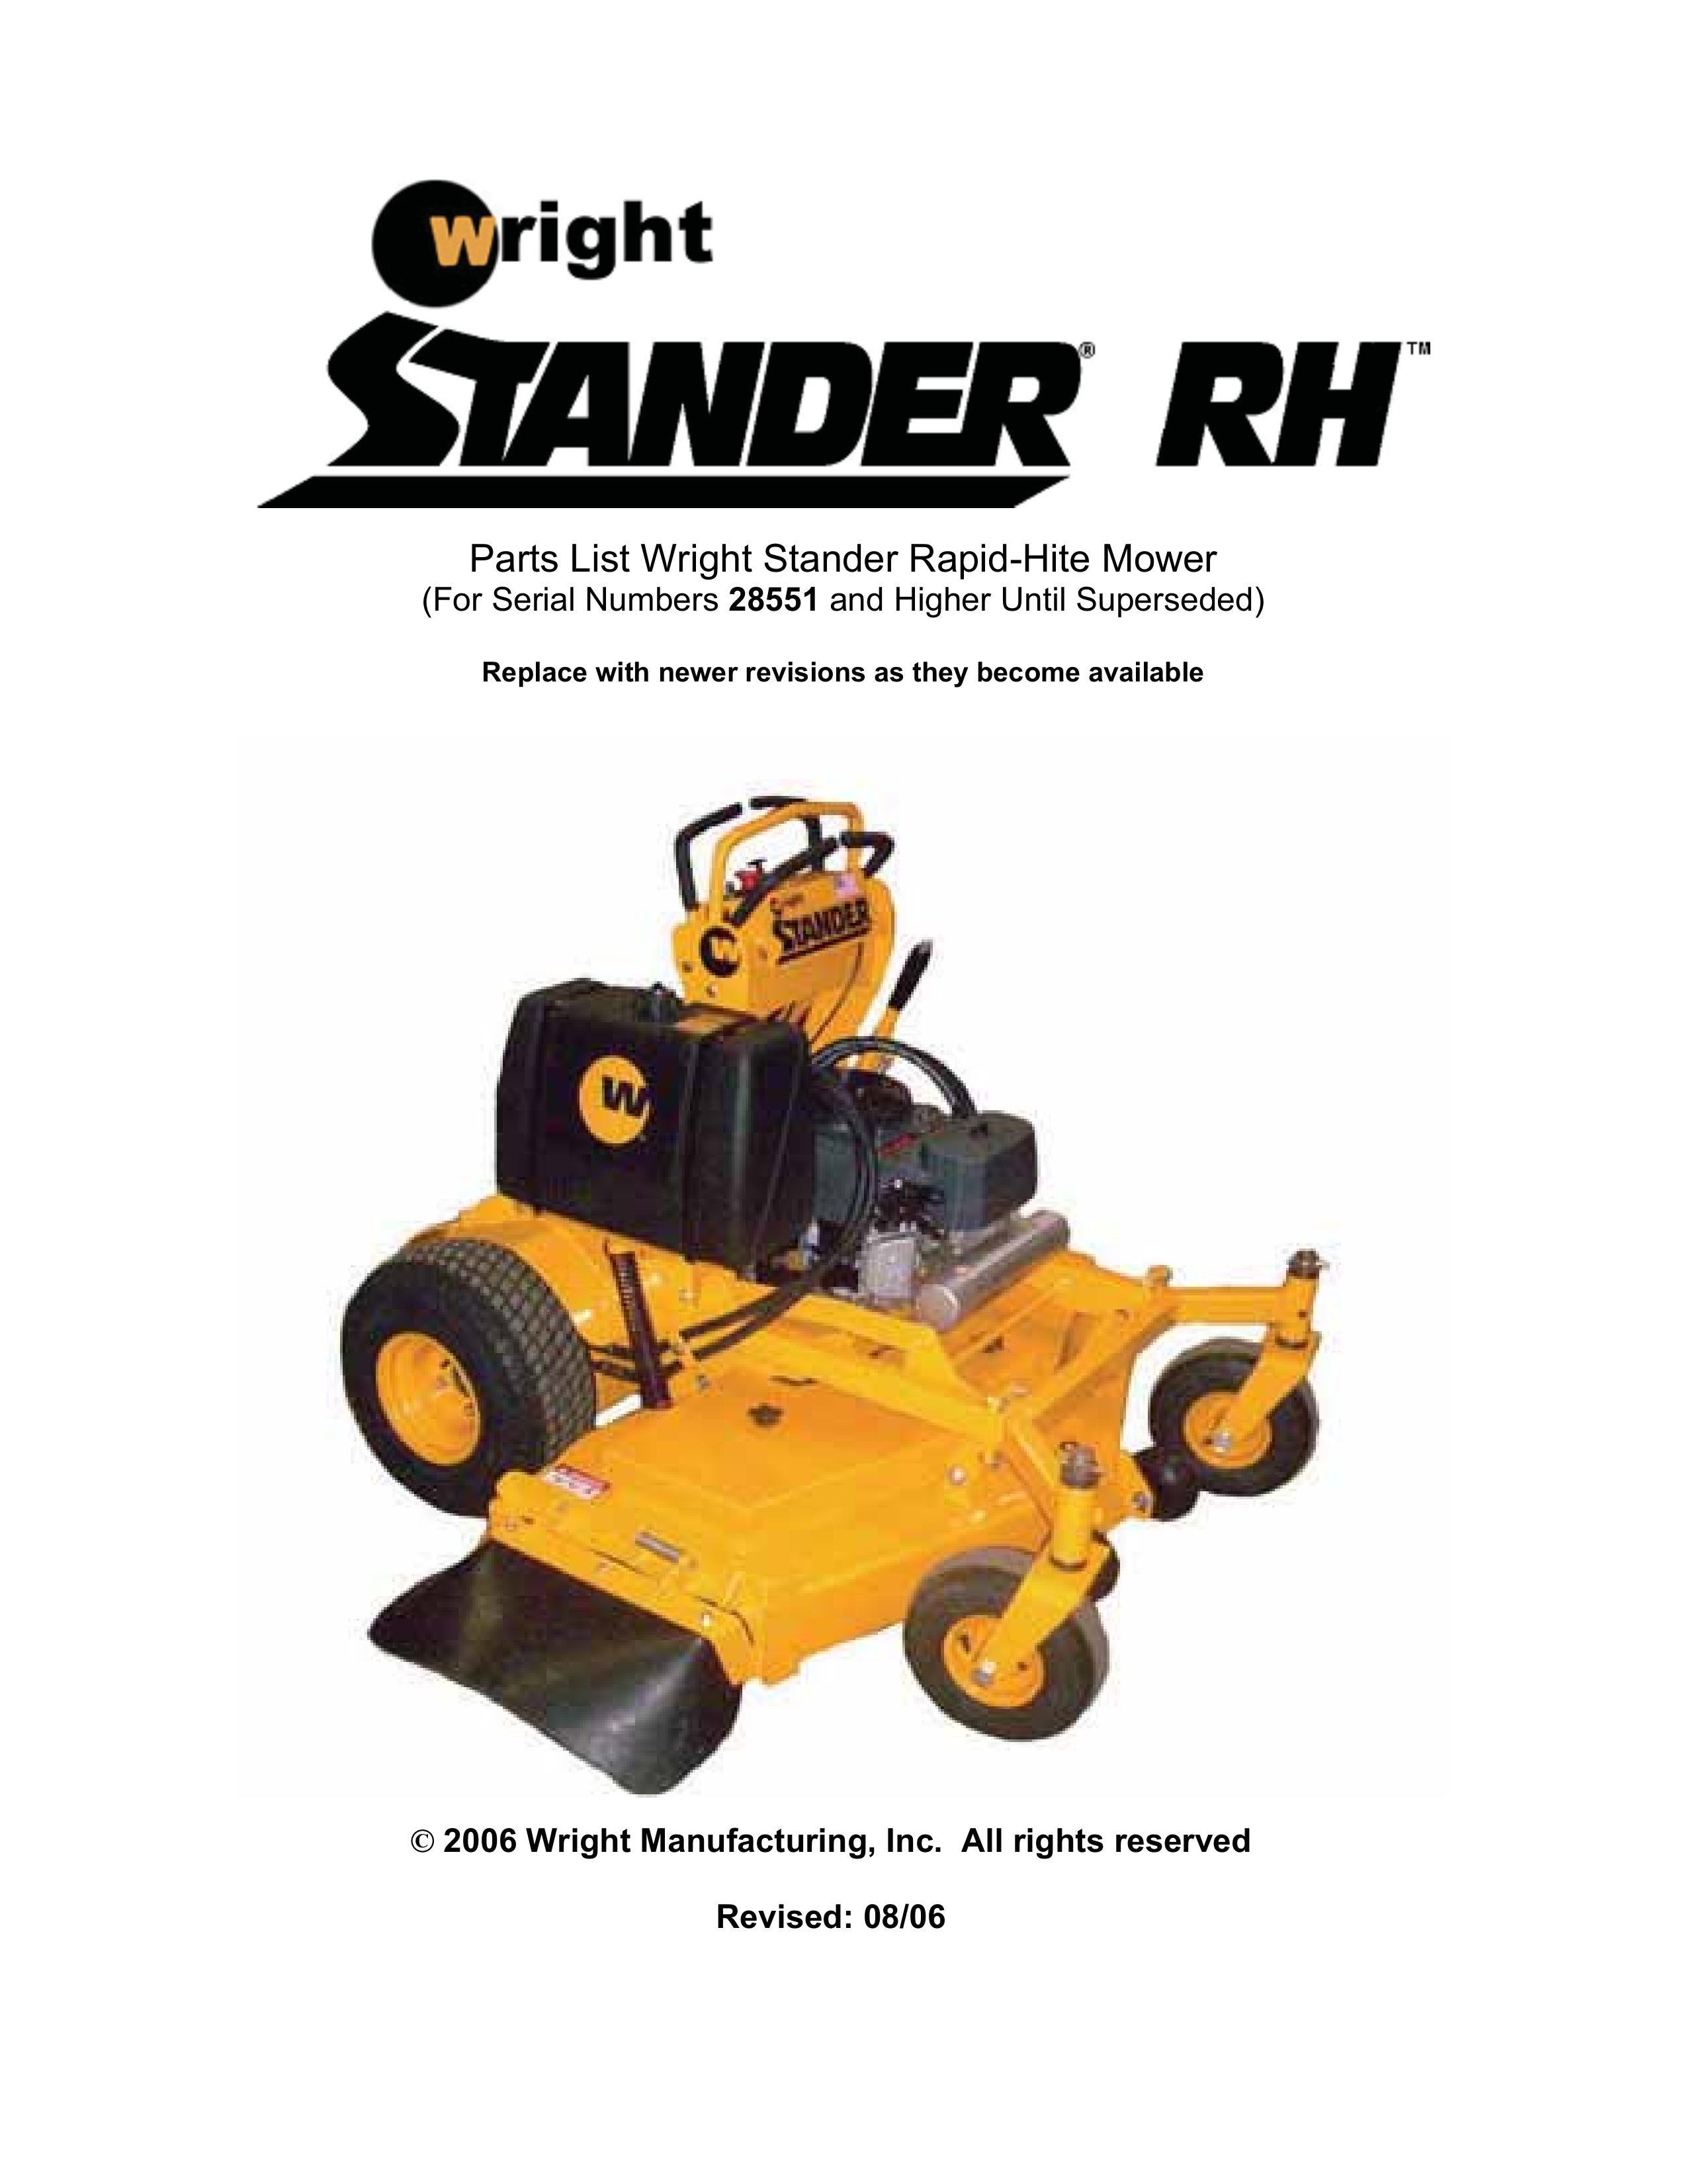 Wright Manufacturing Rapid-Hite Mower Lawn Mower User Manual